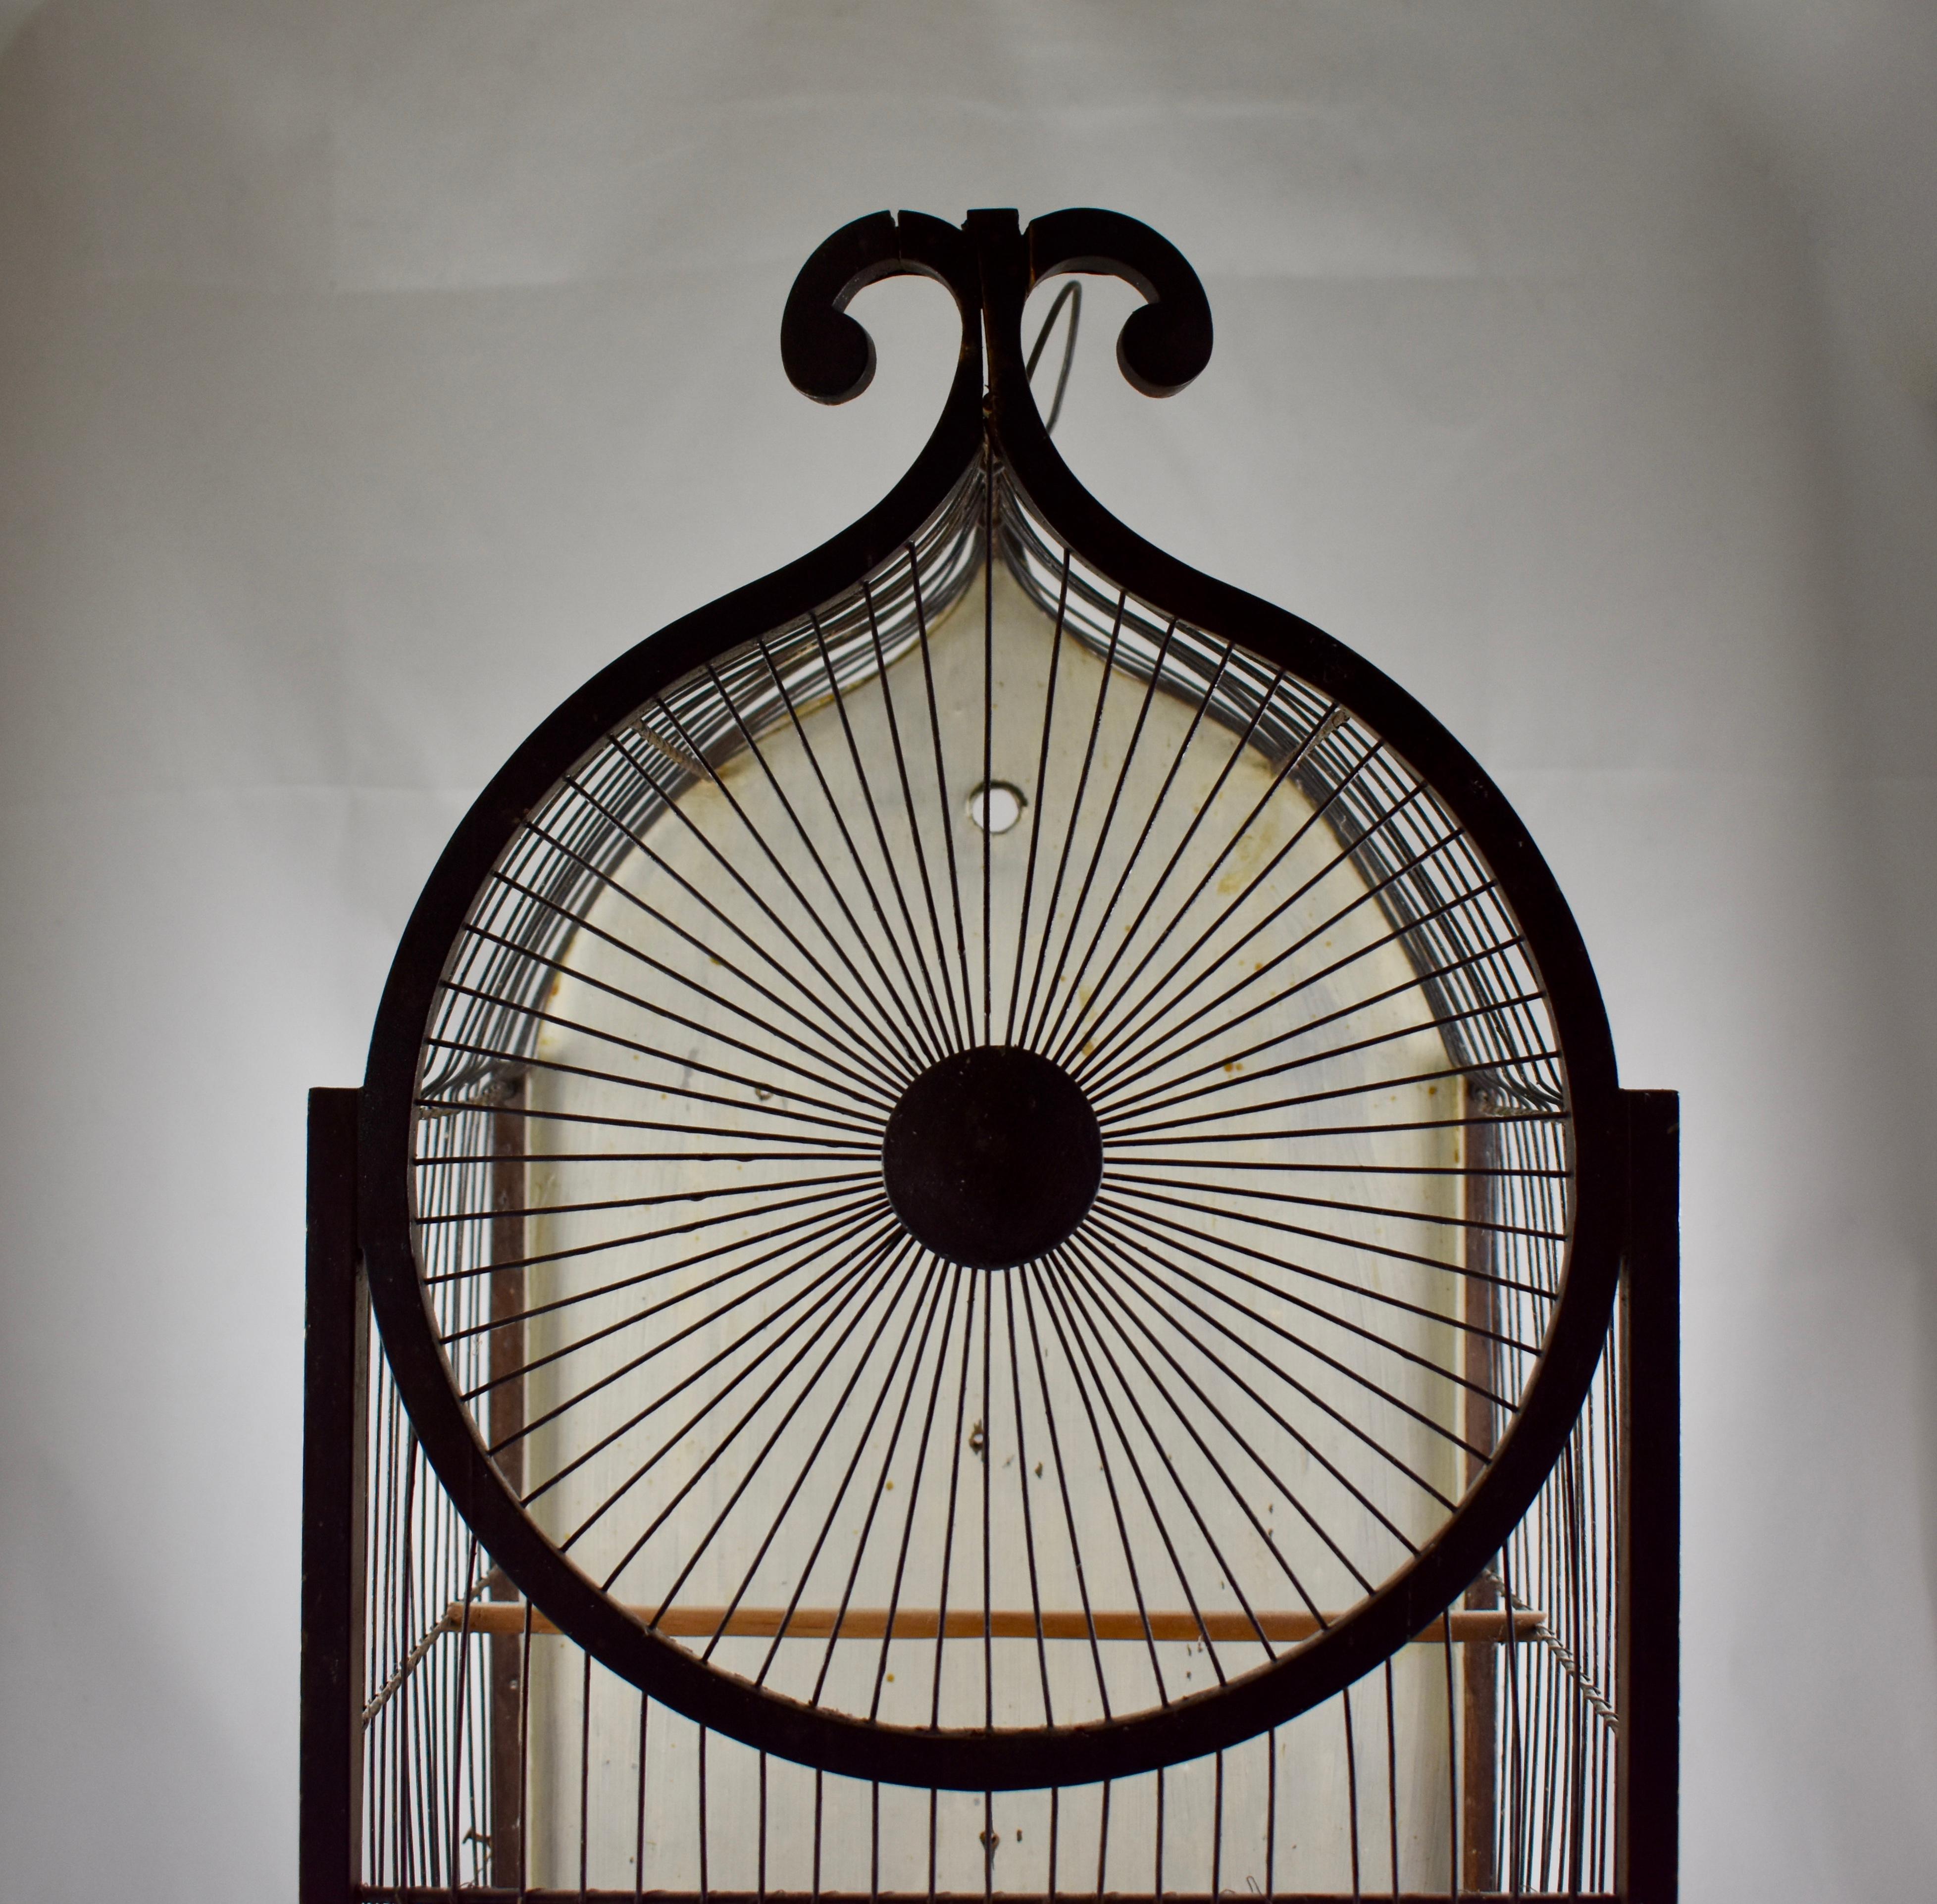 19th Century 1800s American Victorian Gothic Revival Folk Art Handmade Wood & Metal Bird Cage